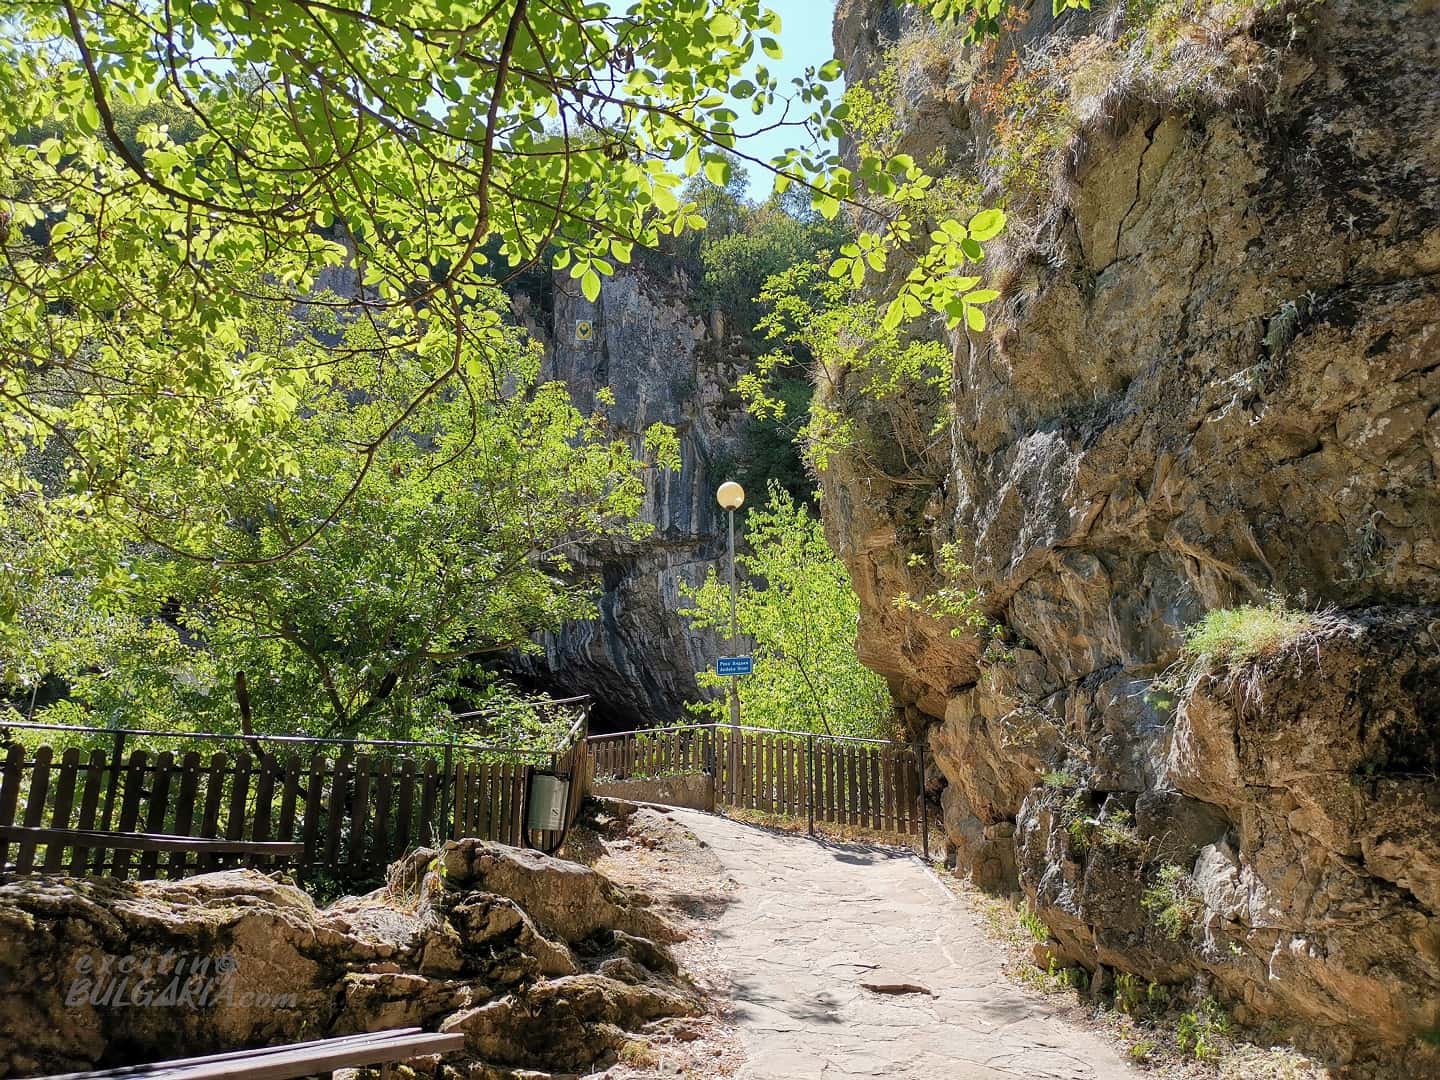 Near the entrance of the Bacho Kiro cave